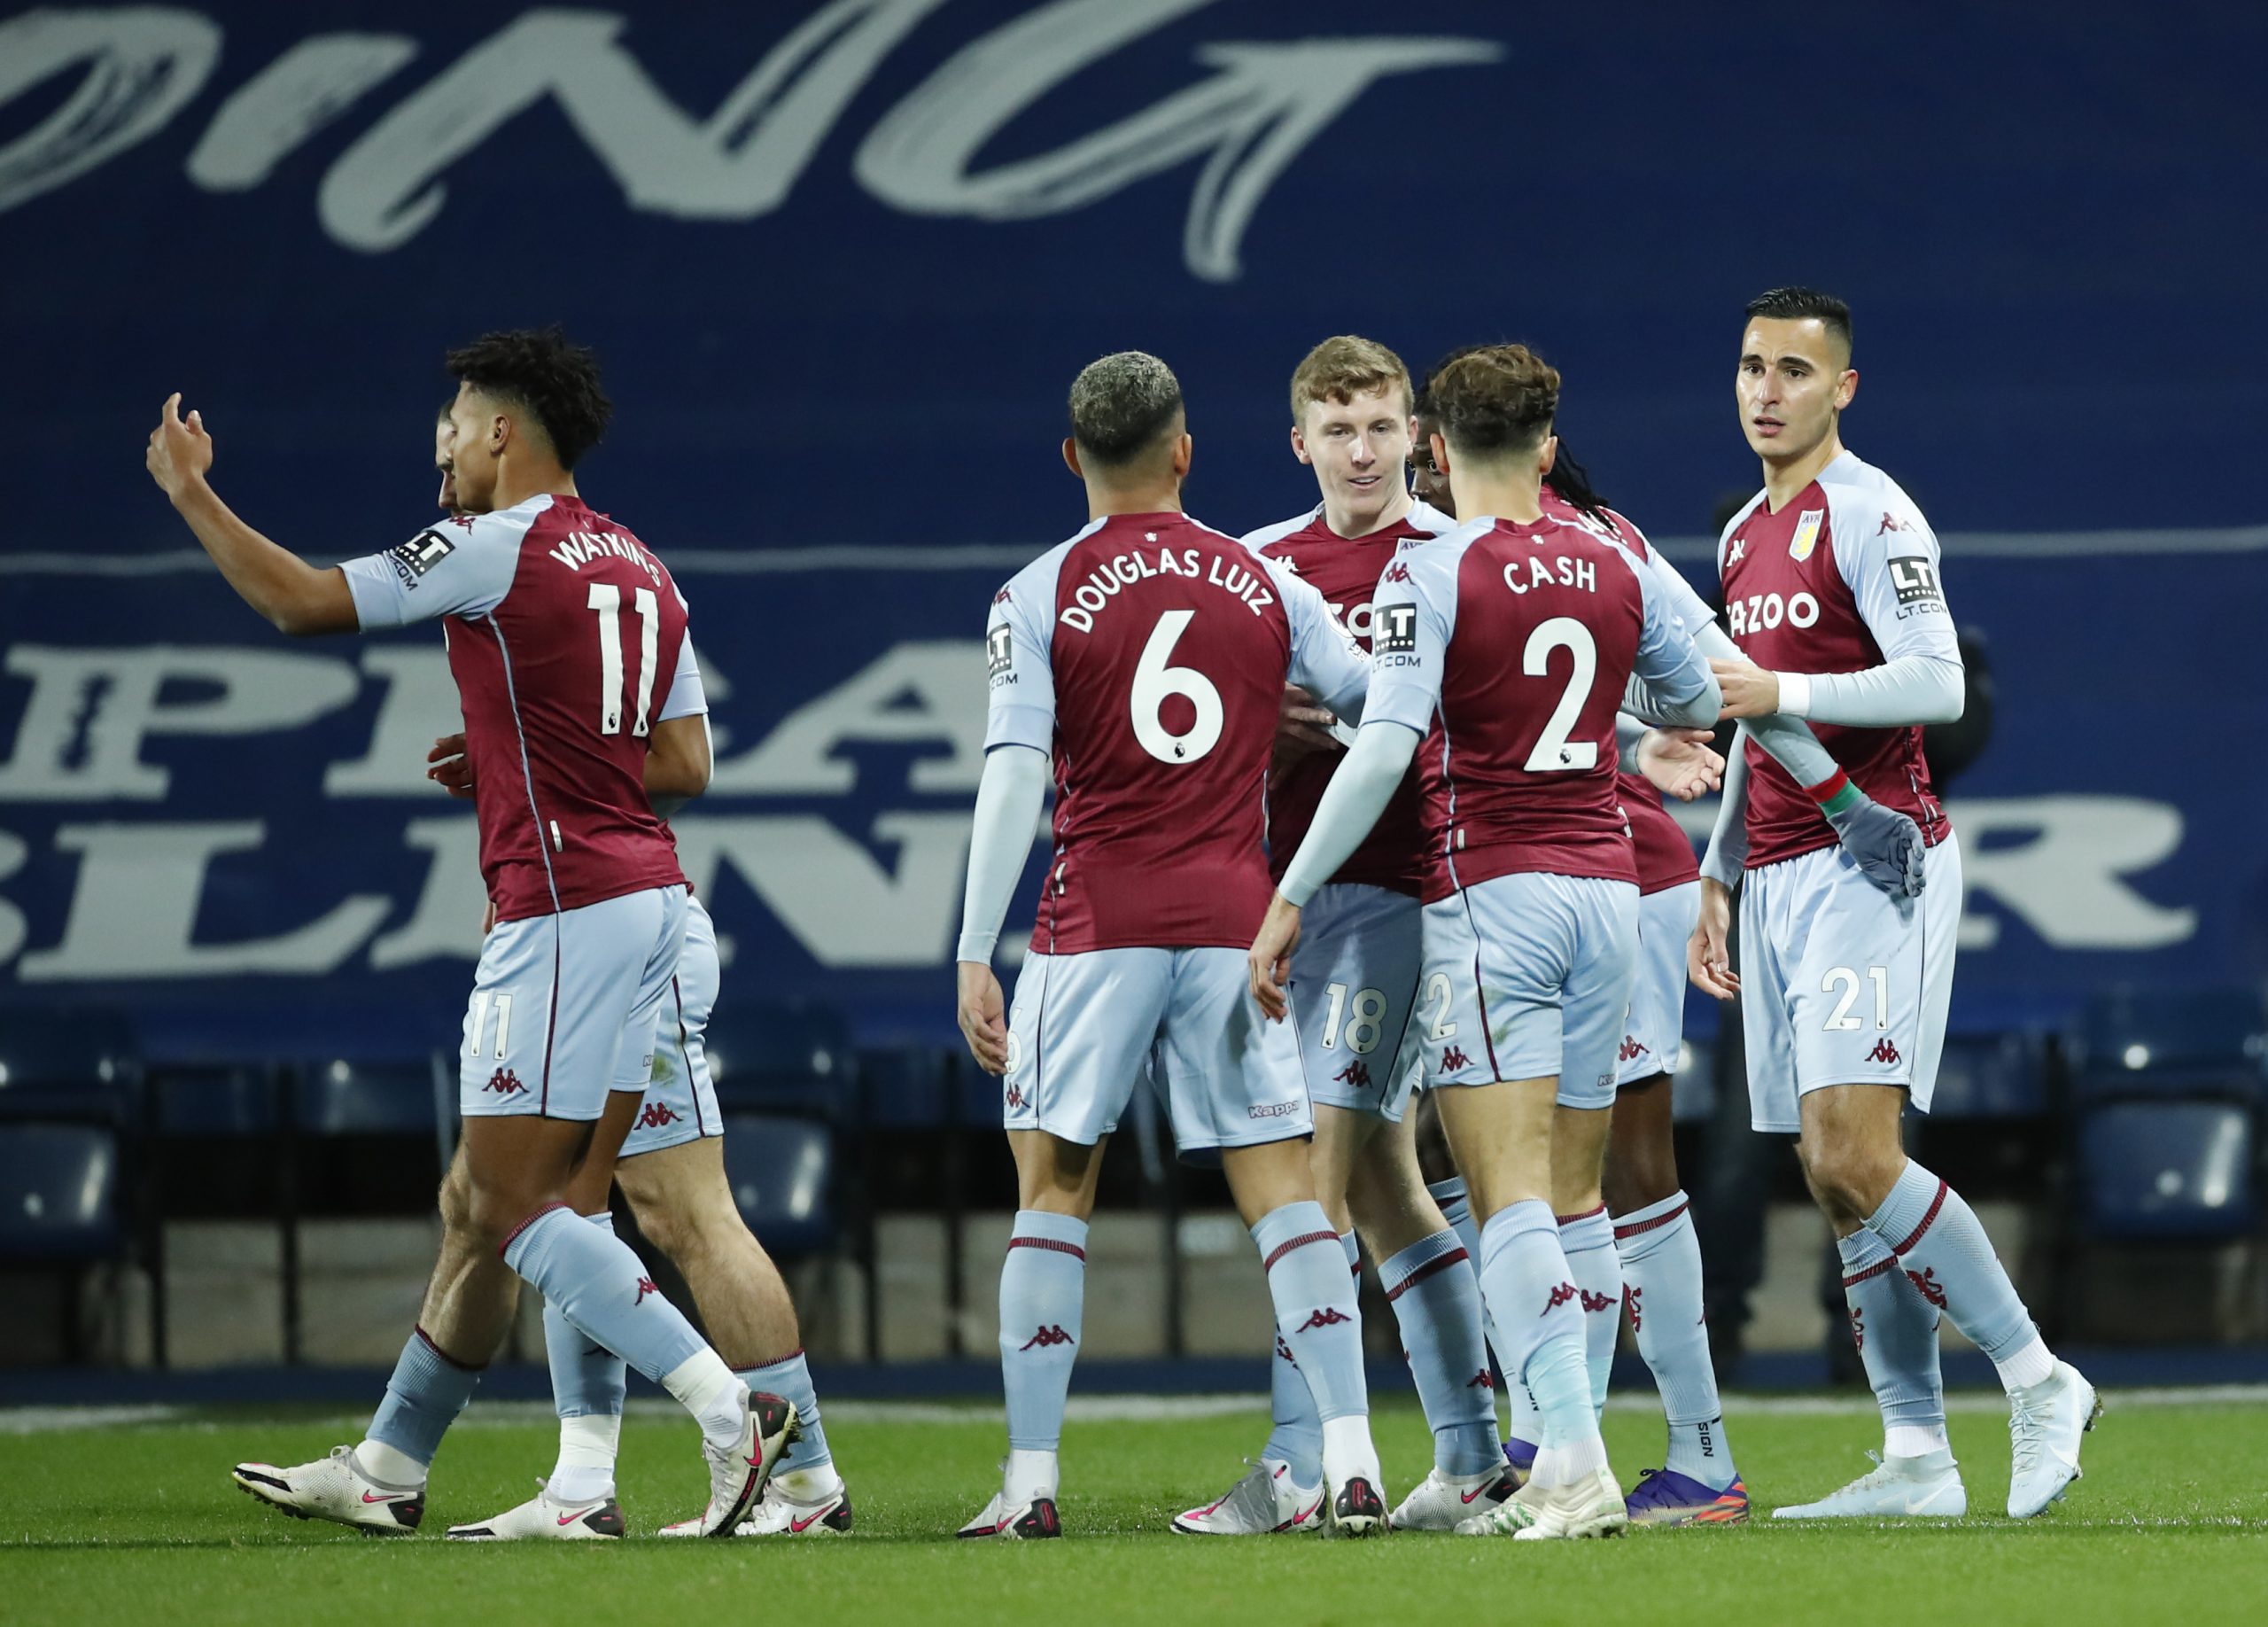 4-3-3 Aston Villa Predicted Lineup Vs Wolves (Aston Villa players are celebrating in the photo)